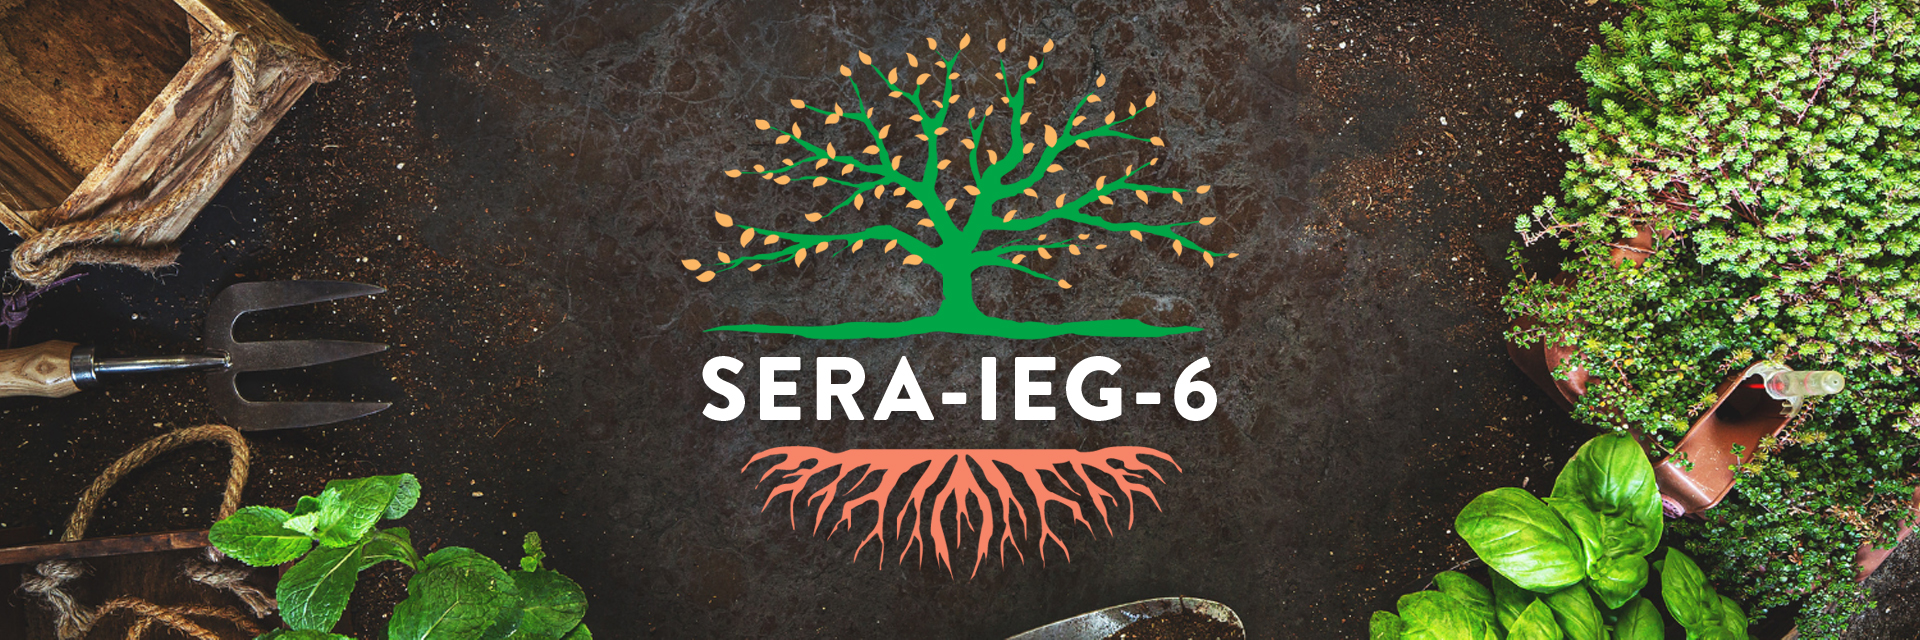 2023 SERA-IEG-6 Conference & Annual Meeting event at Auburn University, Alabama USA